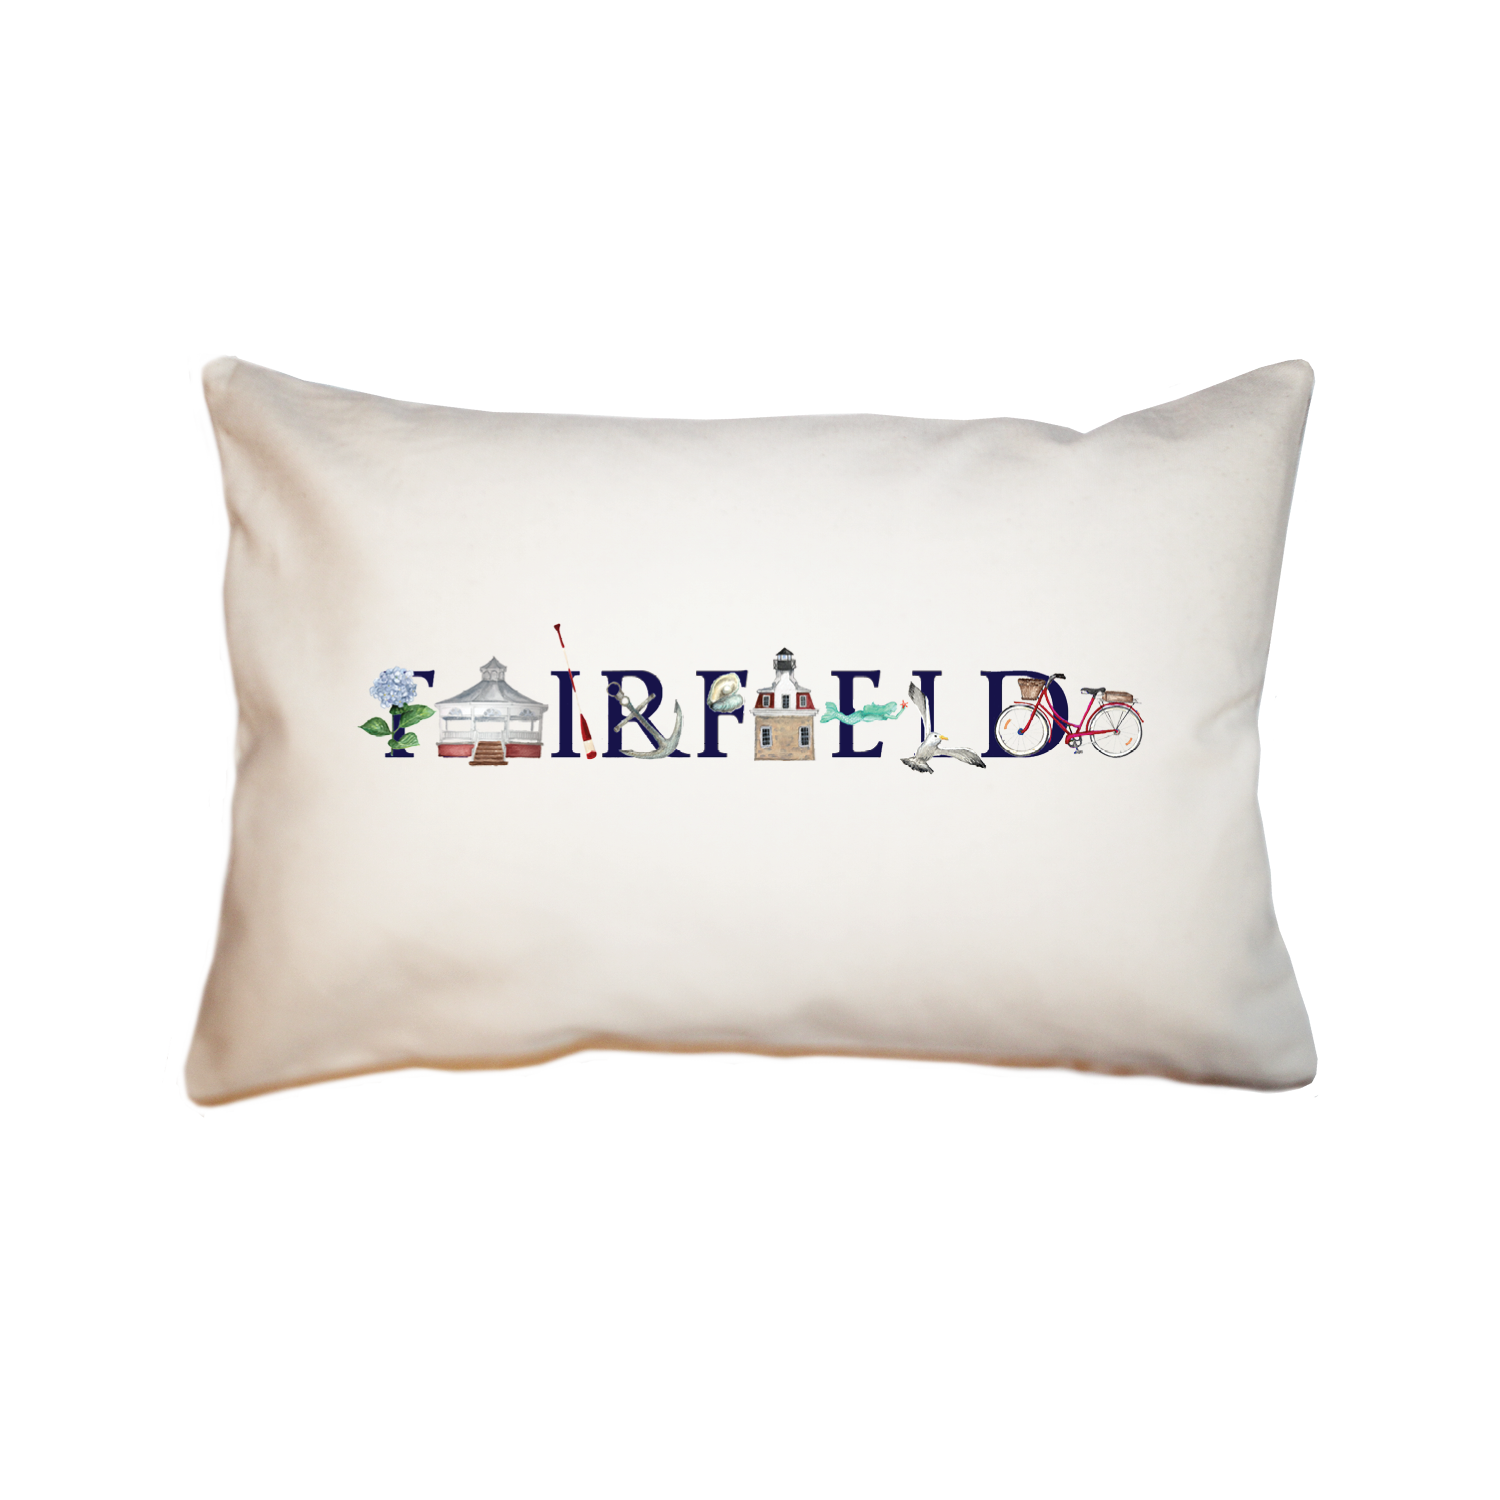 fairfield ct large rectangle pillow